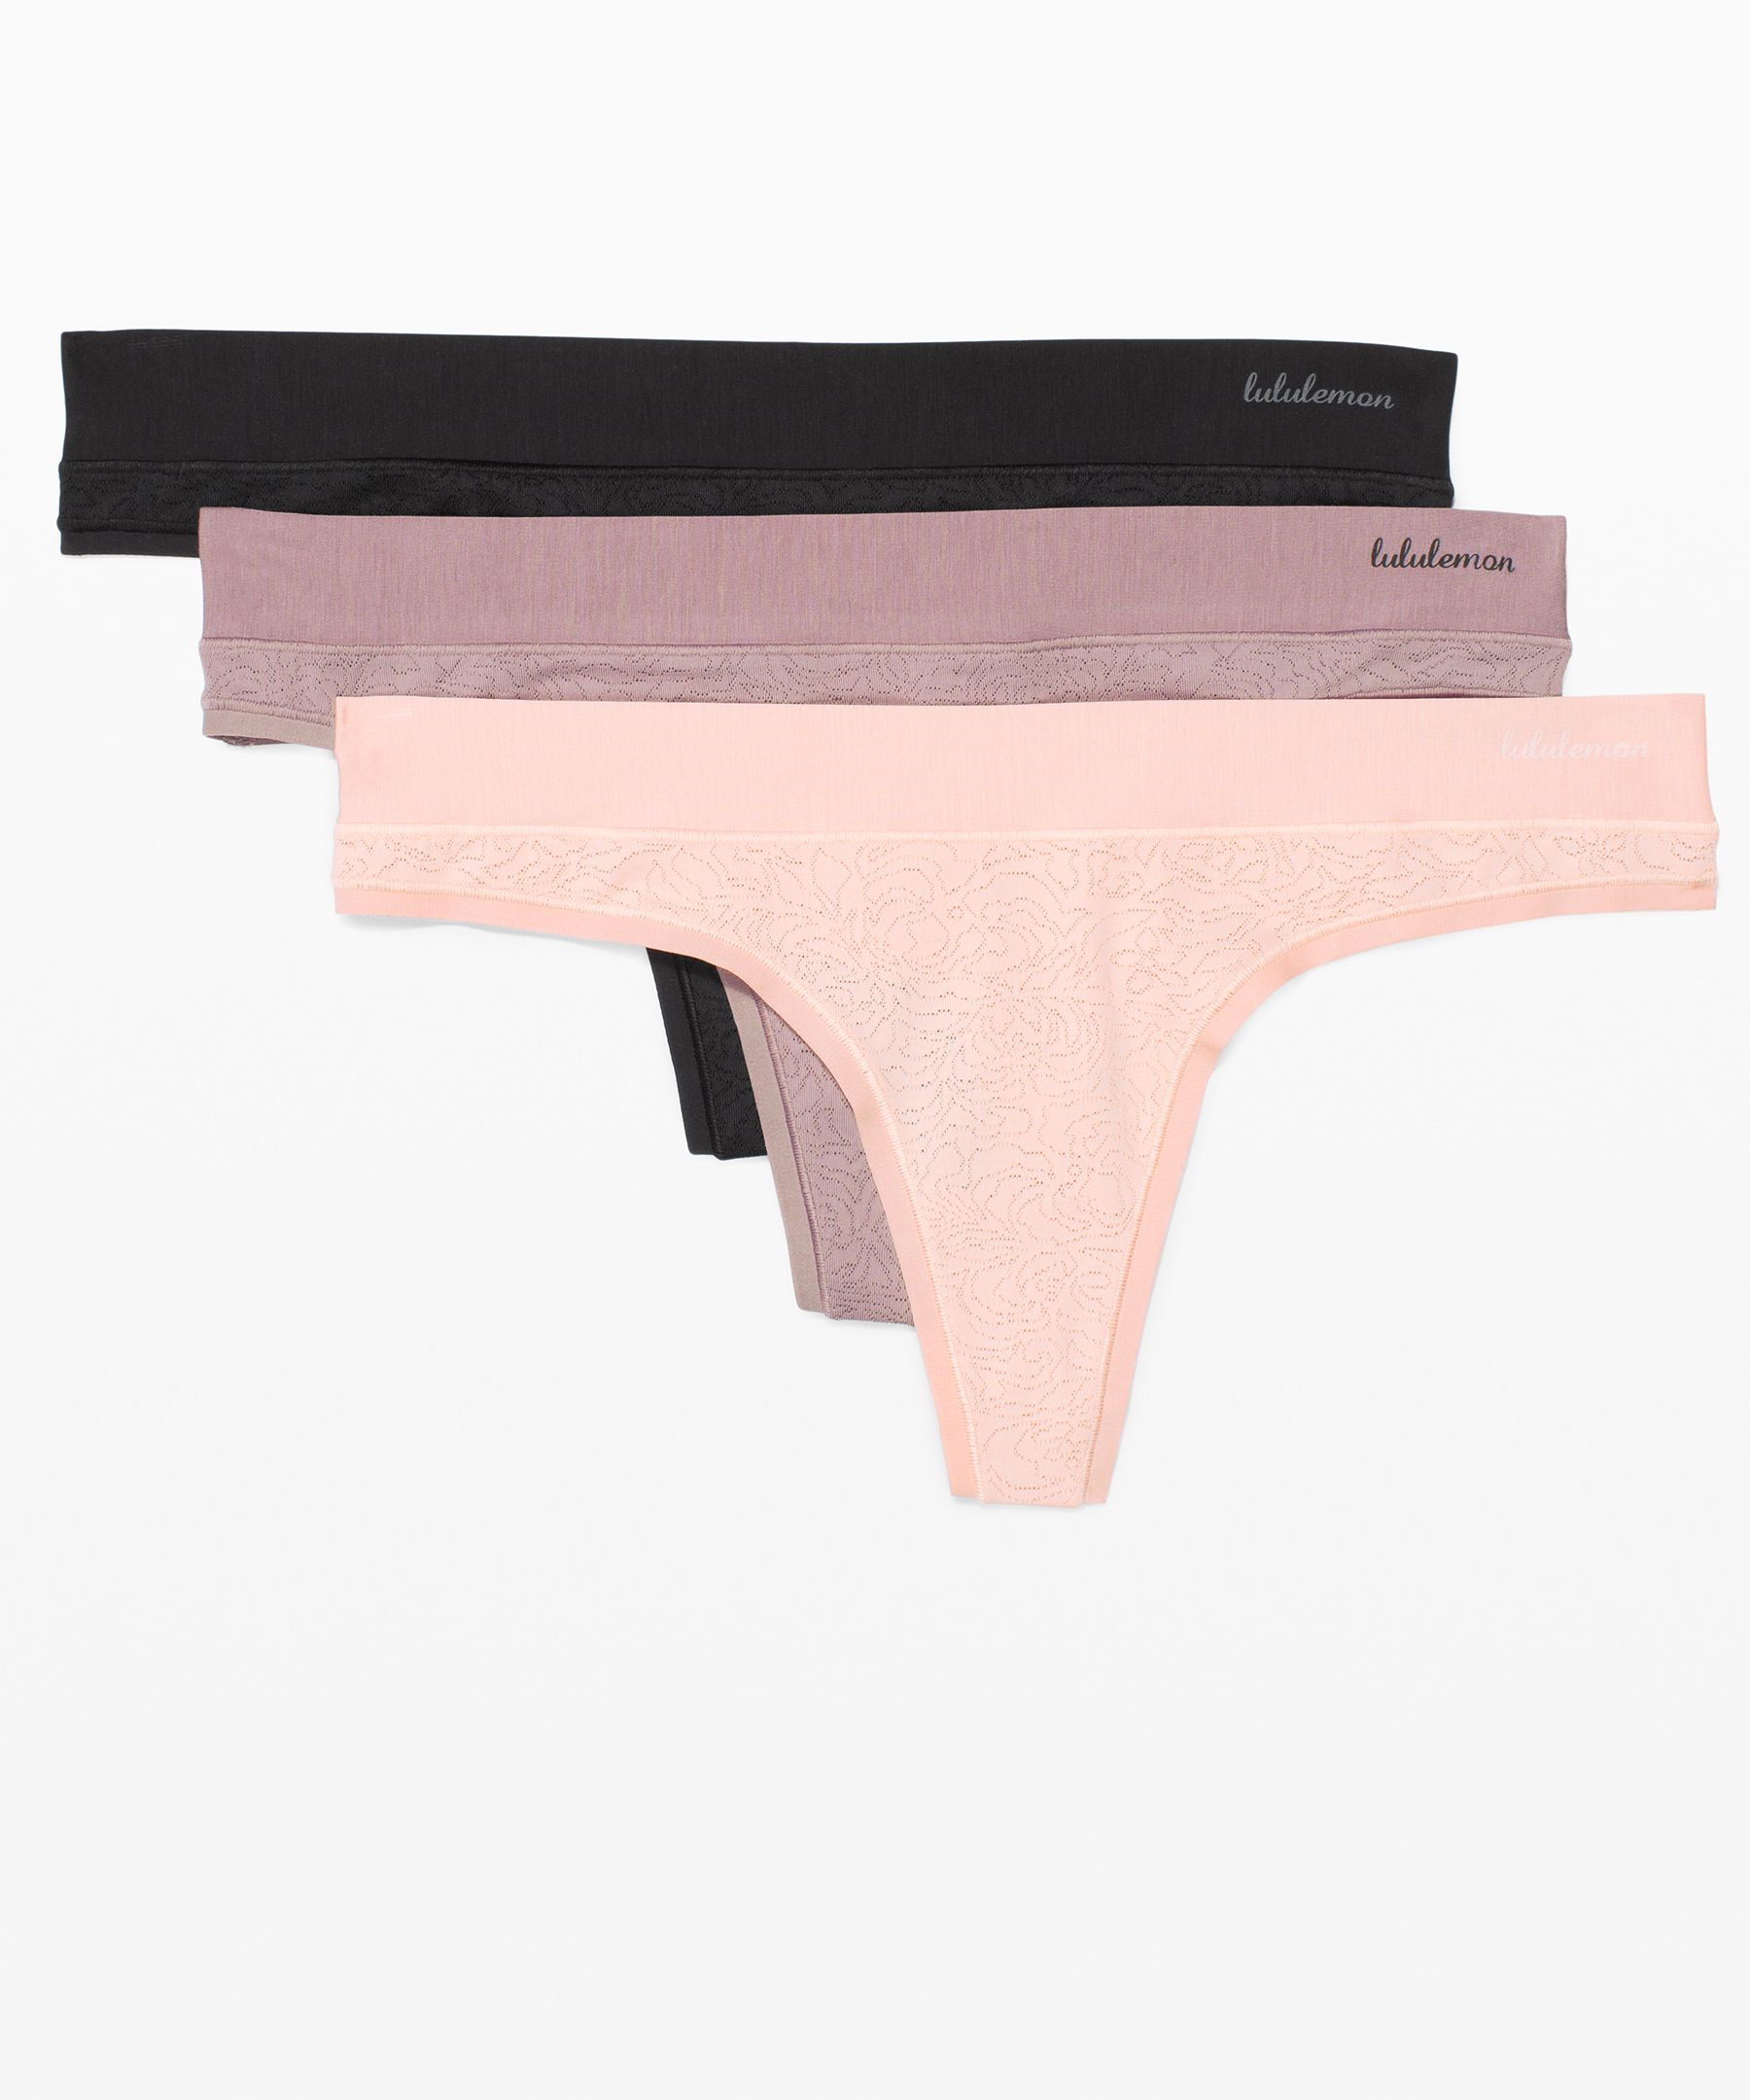 lululemon women's underwear